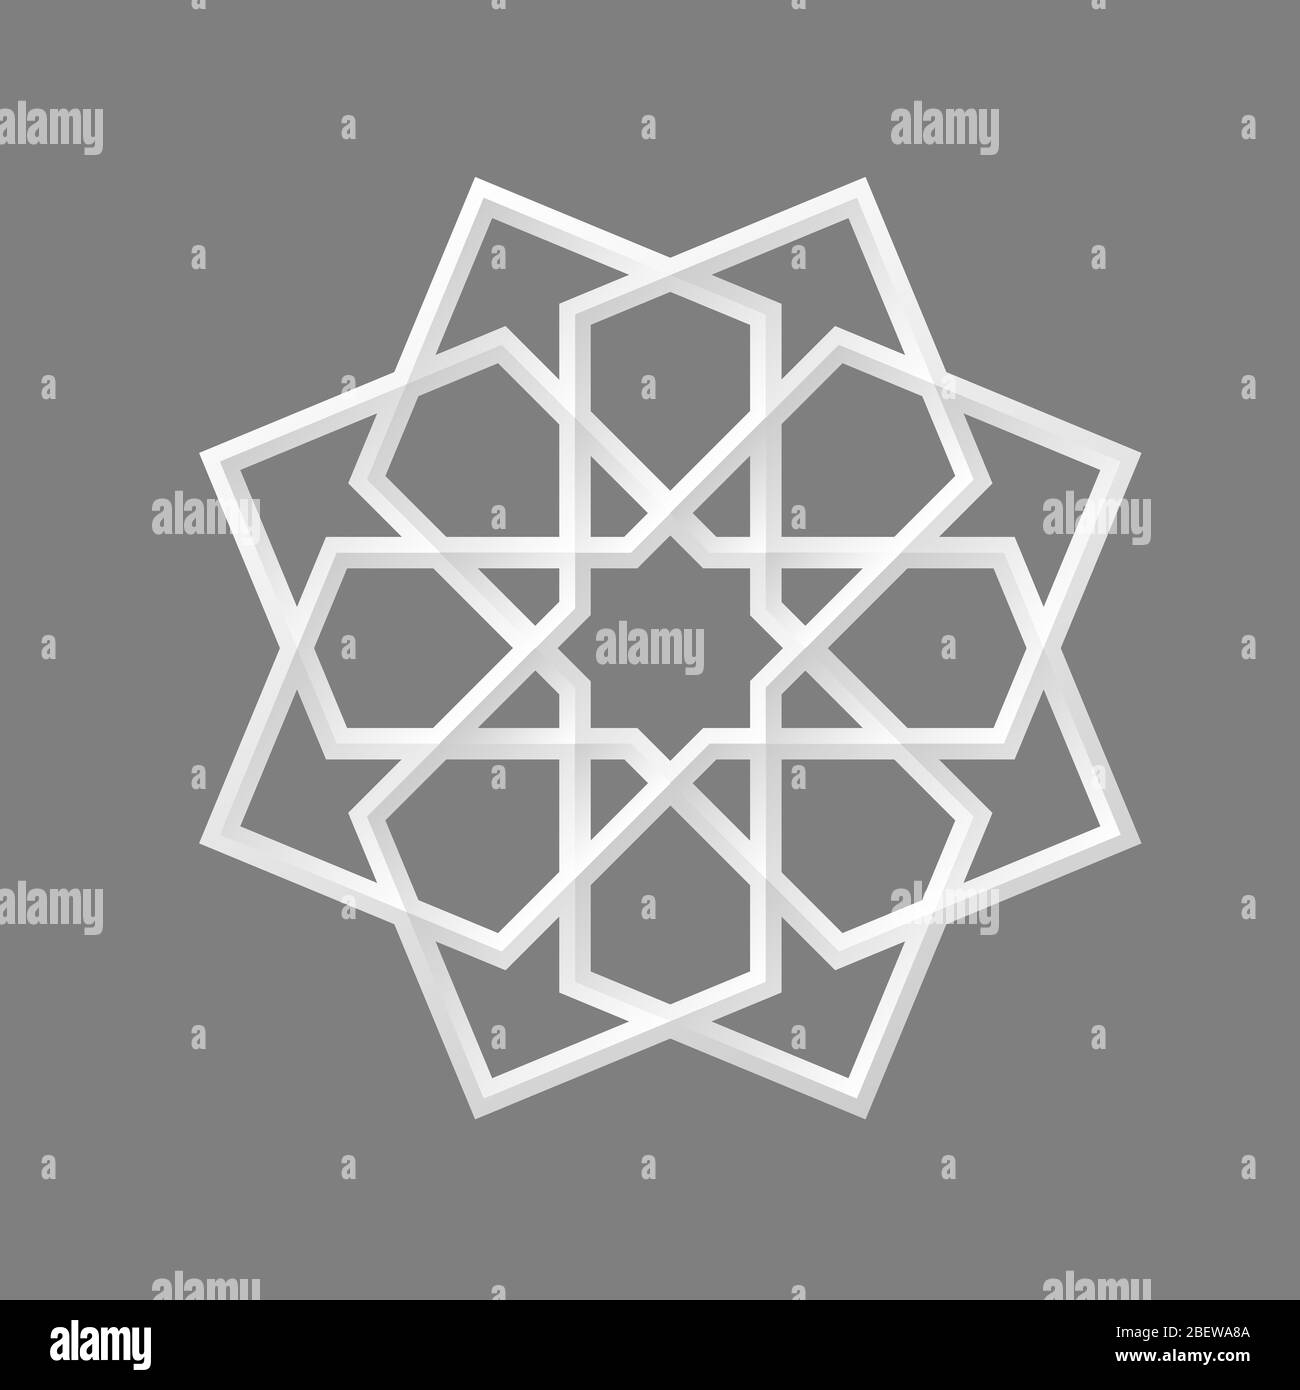 Geometric Islamic Ornament Star Stock Vector